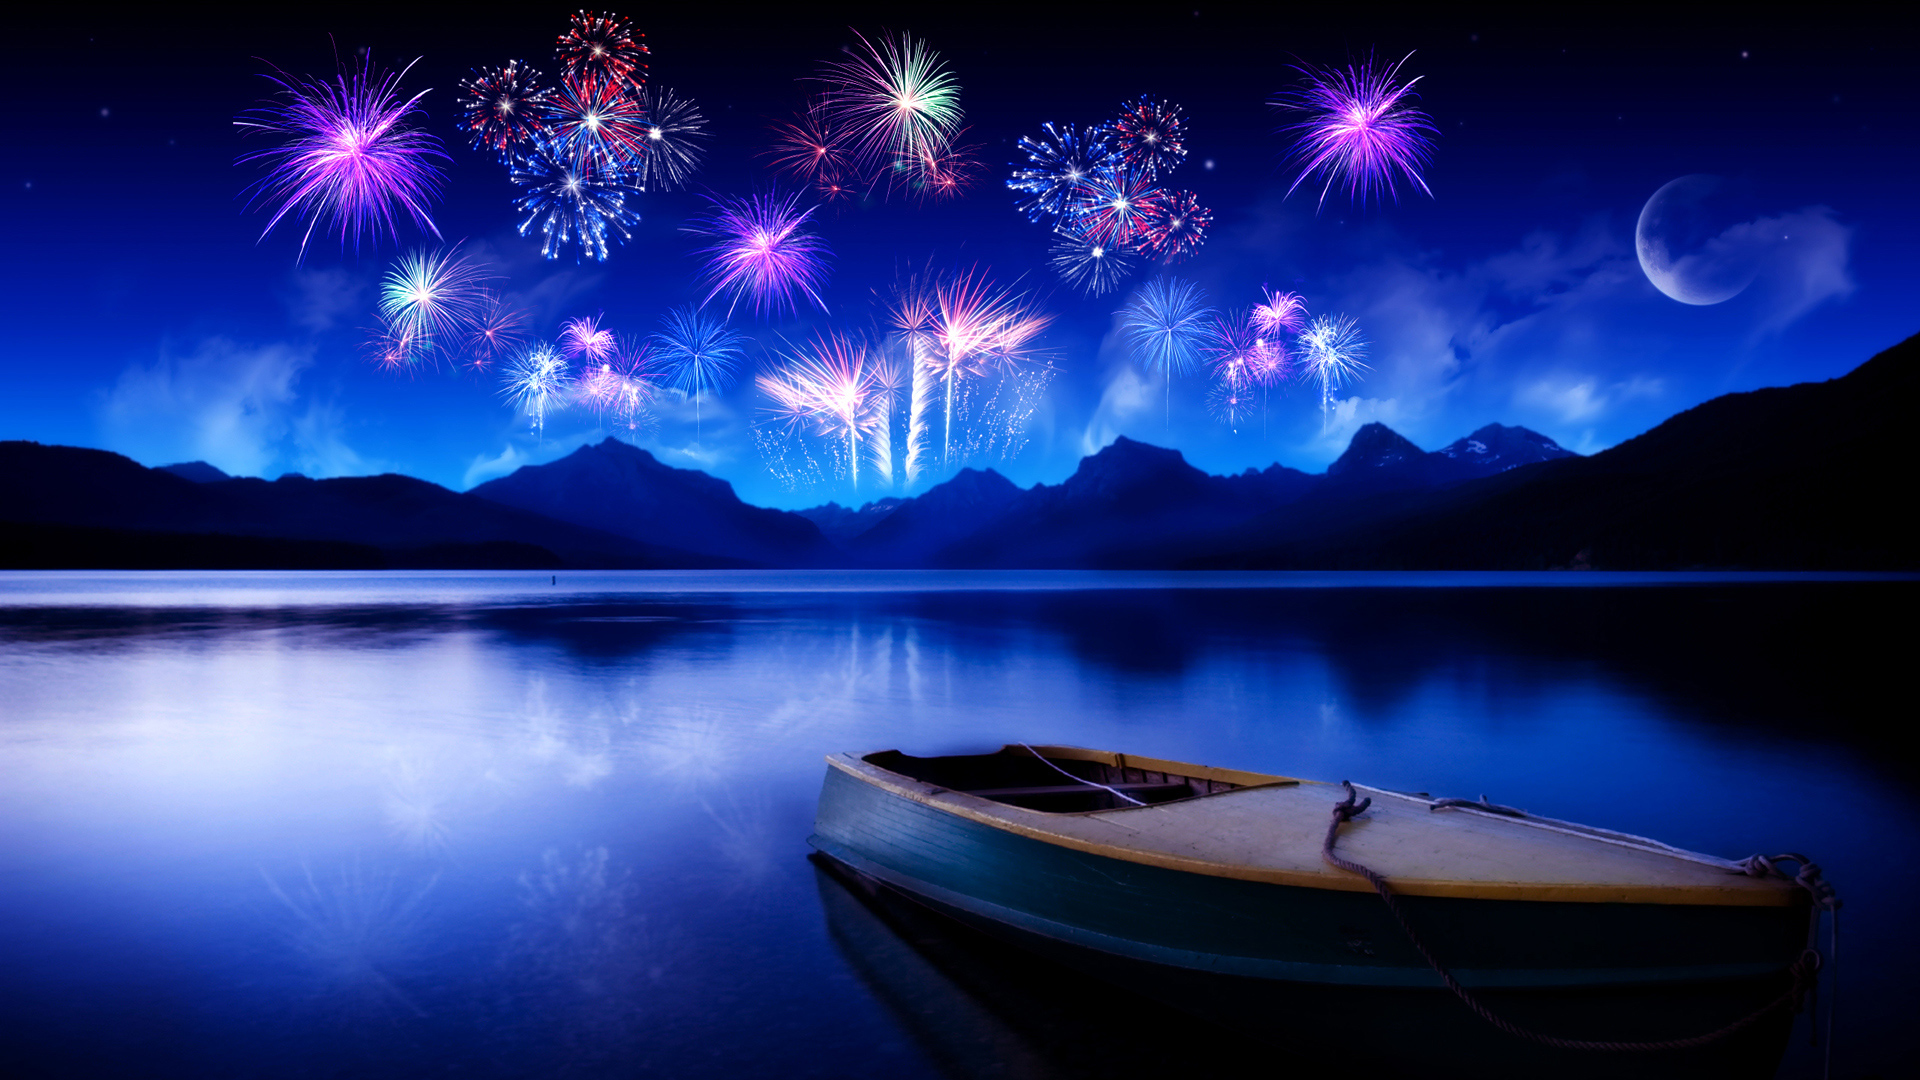 New Years Fireworks wallpaper Full HD 1080p Full HD Wallpapers